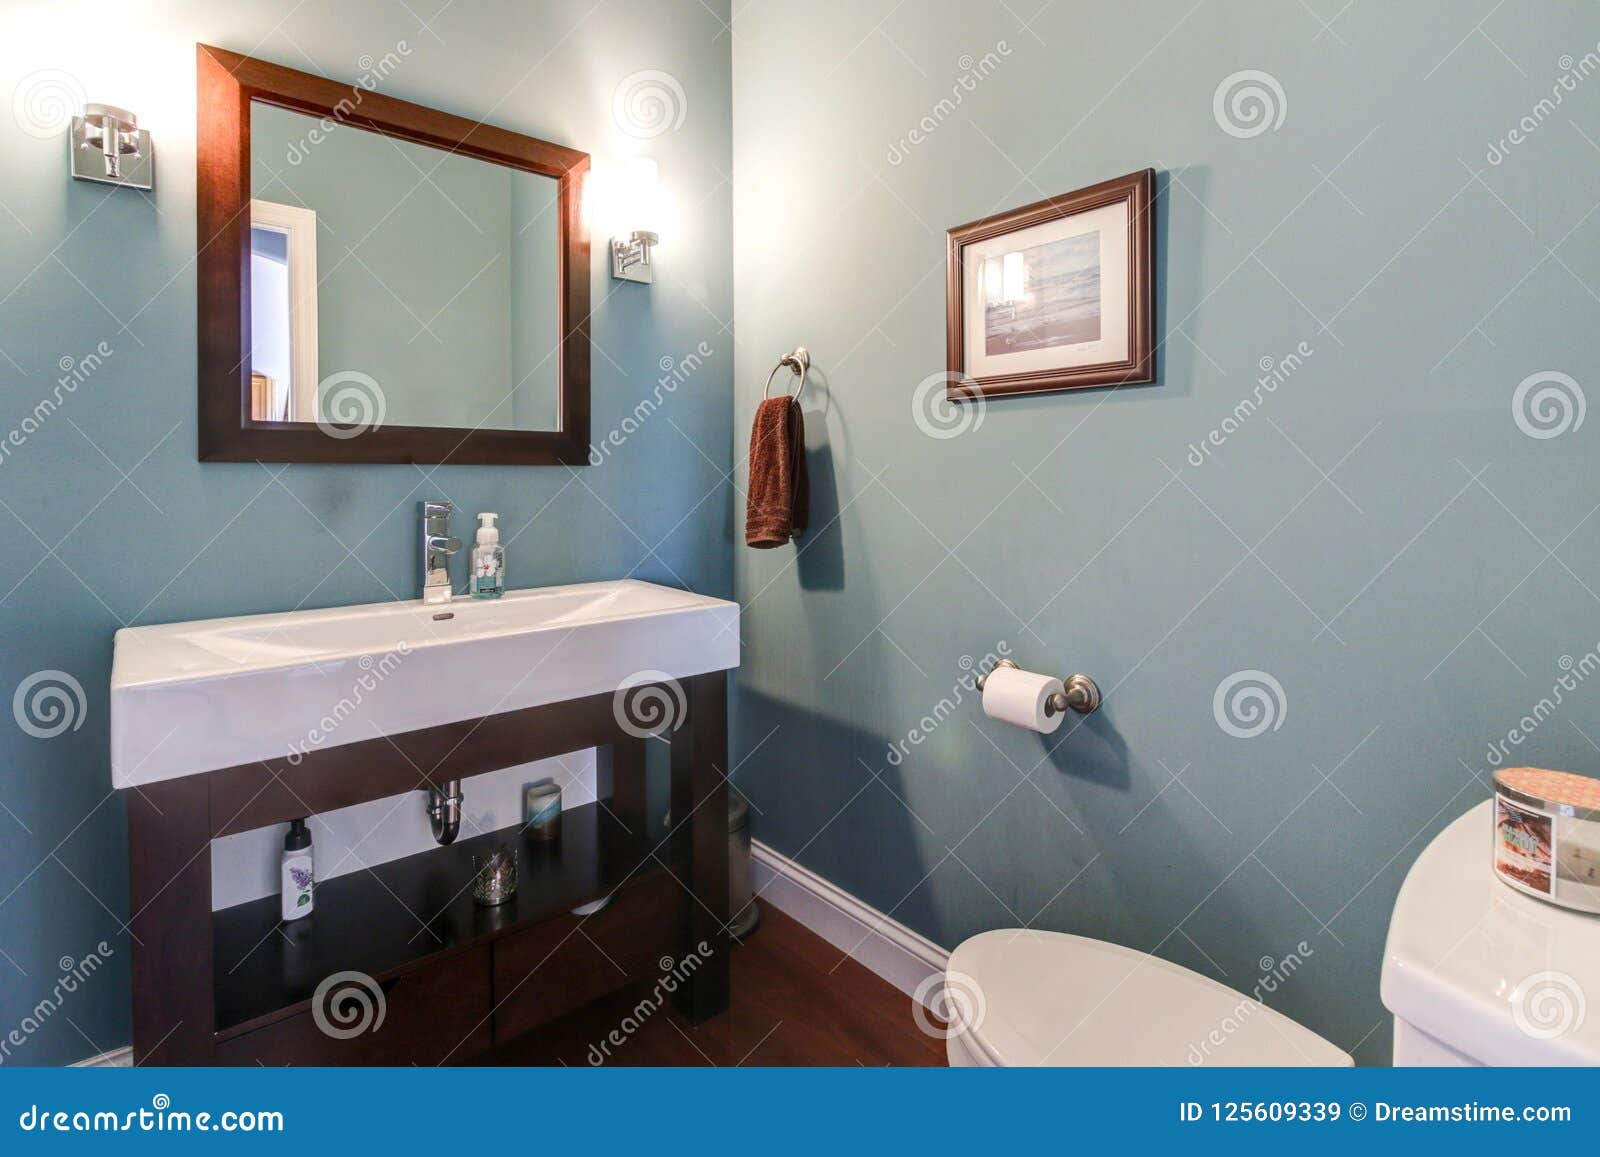 contemporary midwest powder room/half bath.